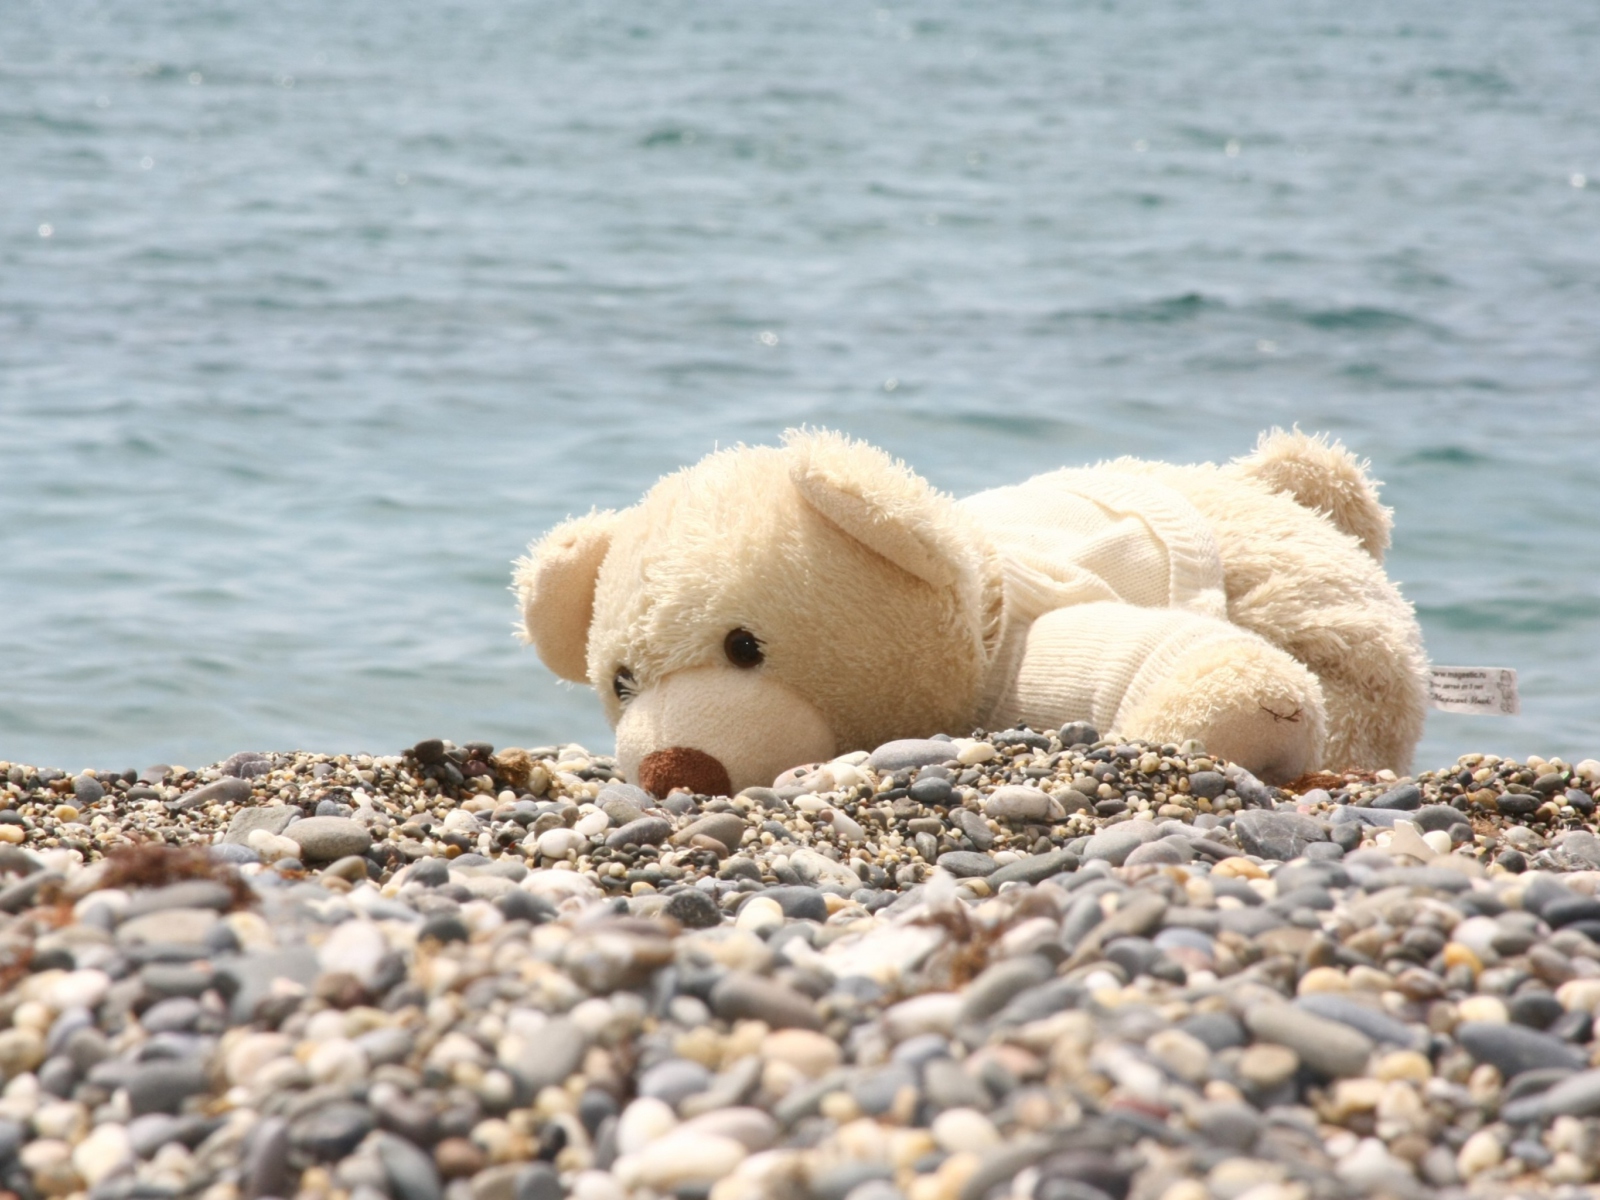 Das White Teddy Forgotten On Beach Wallpaper 1600x1200